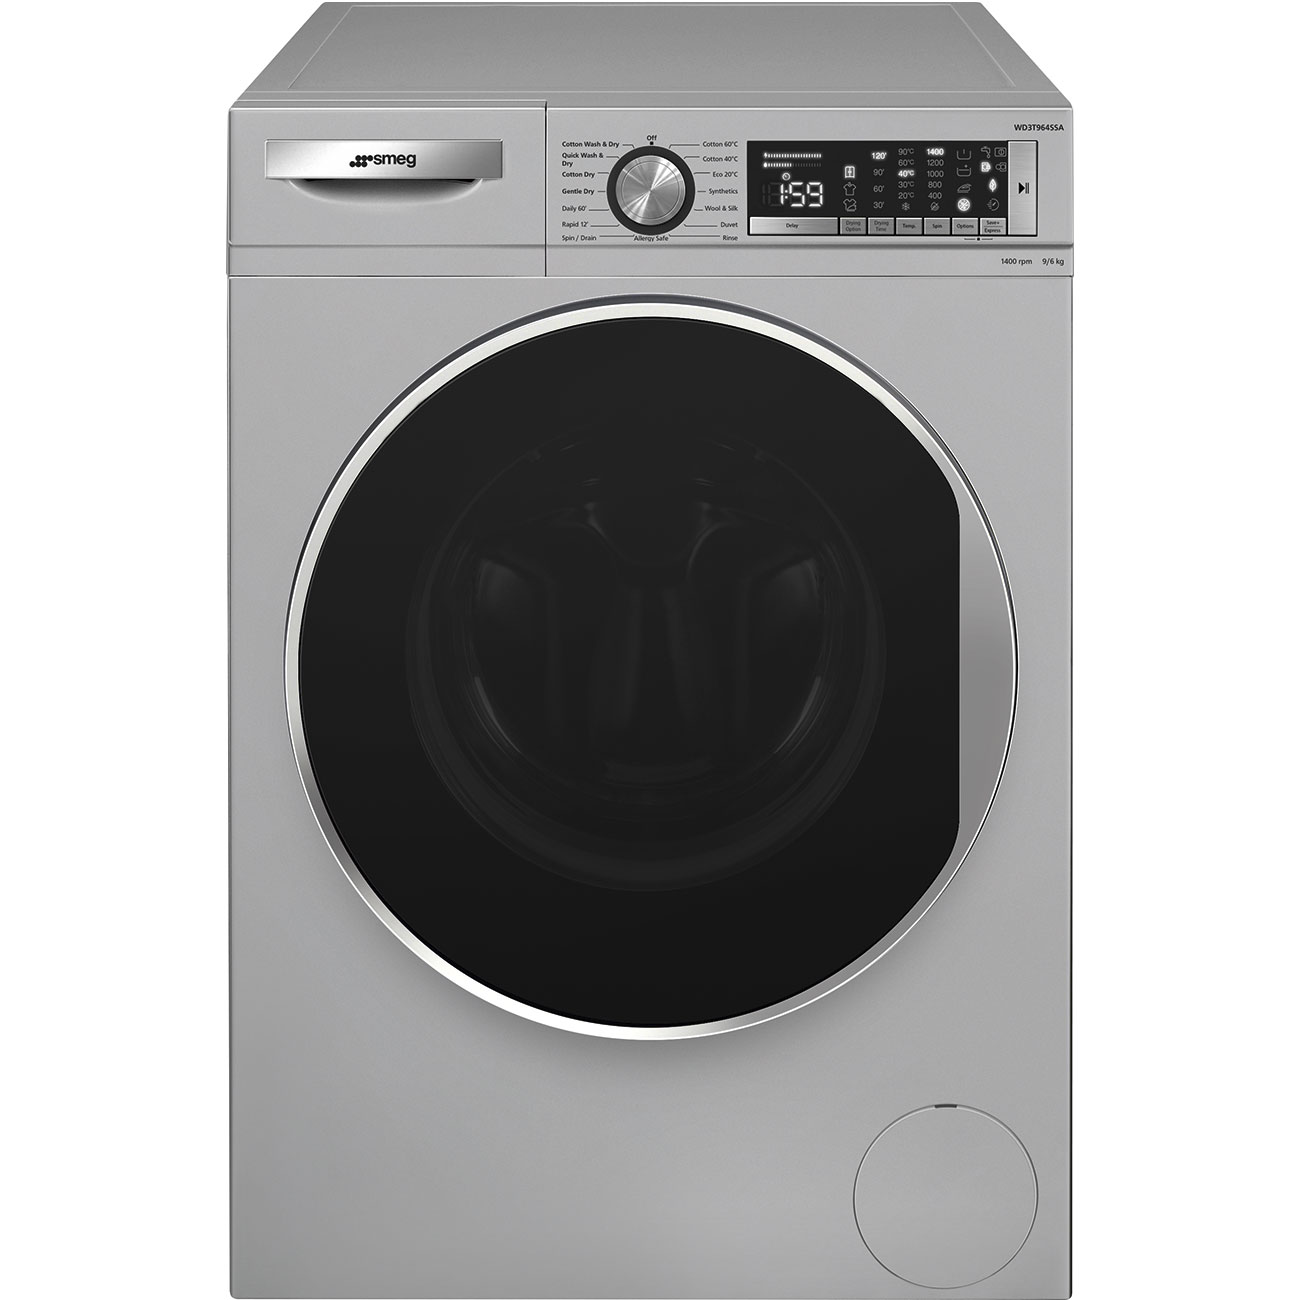 Free-standing washer dryer Smeg_1